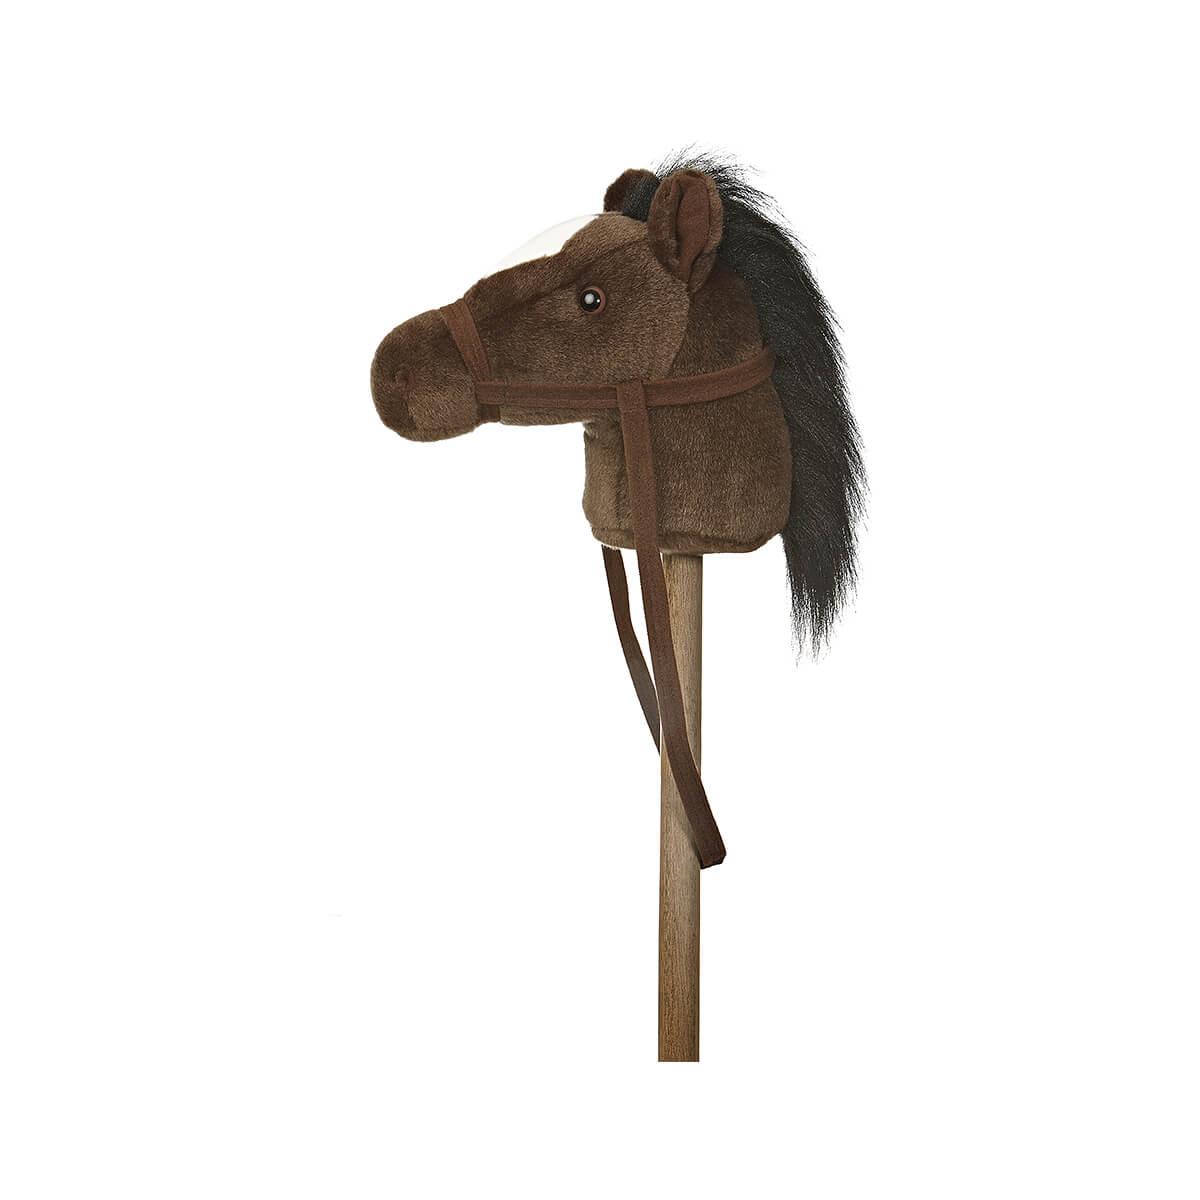  Giddy Up Friends Stick Animal Toy - Dark Brown Pony